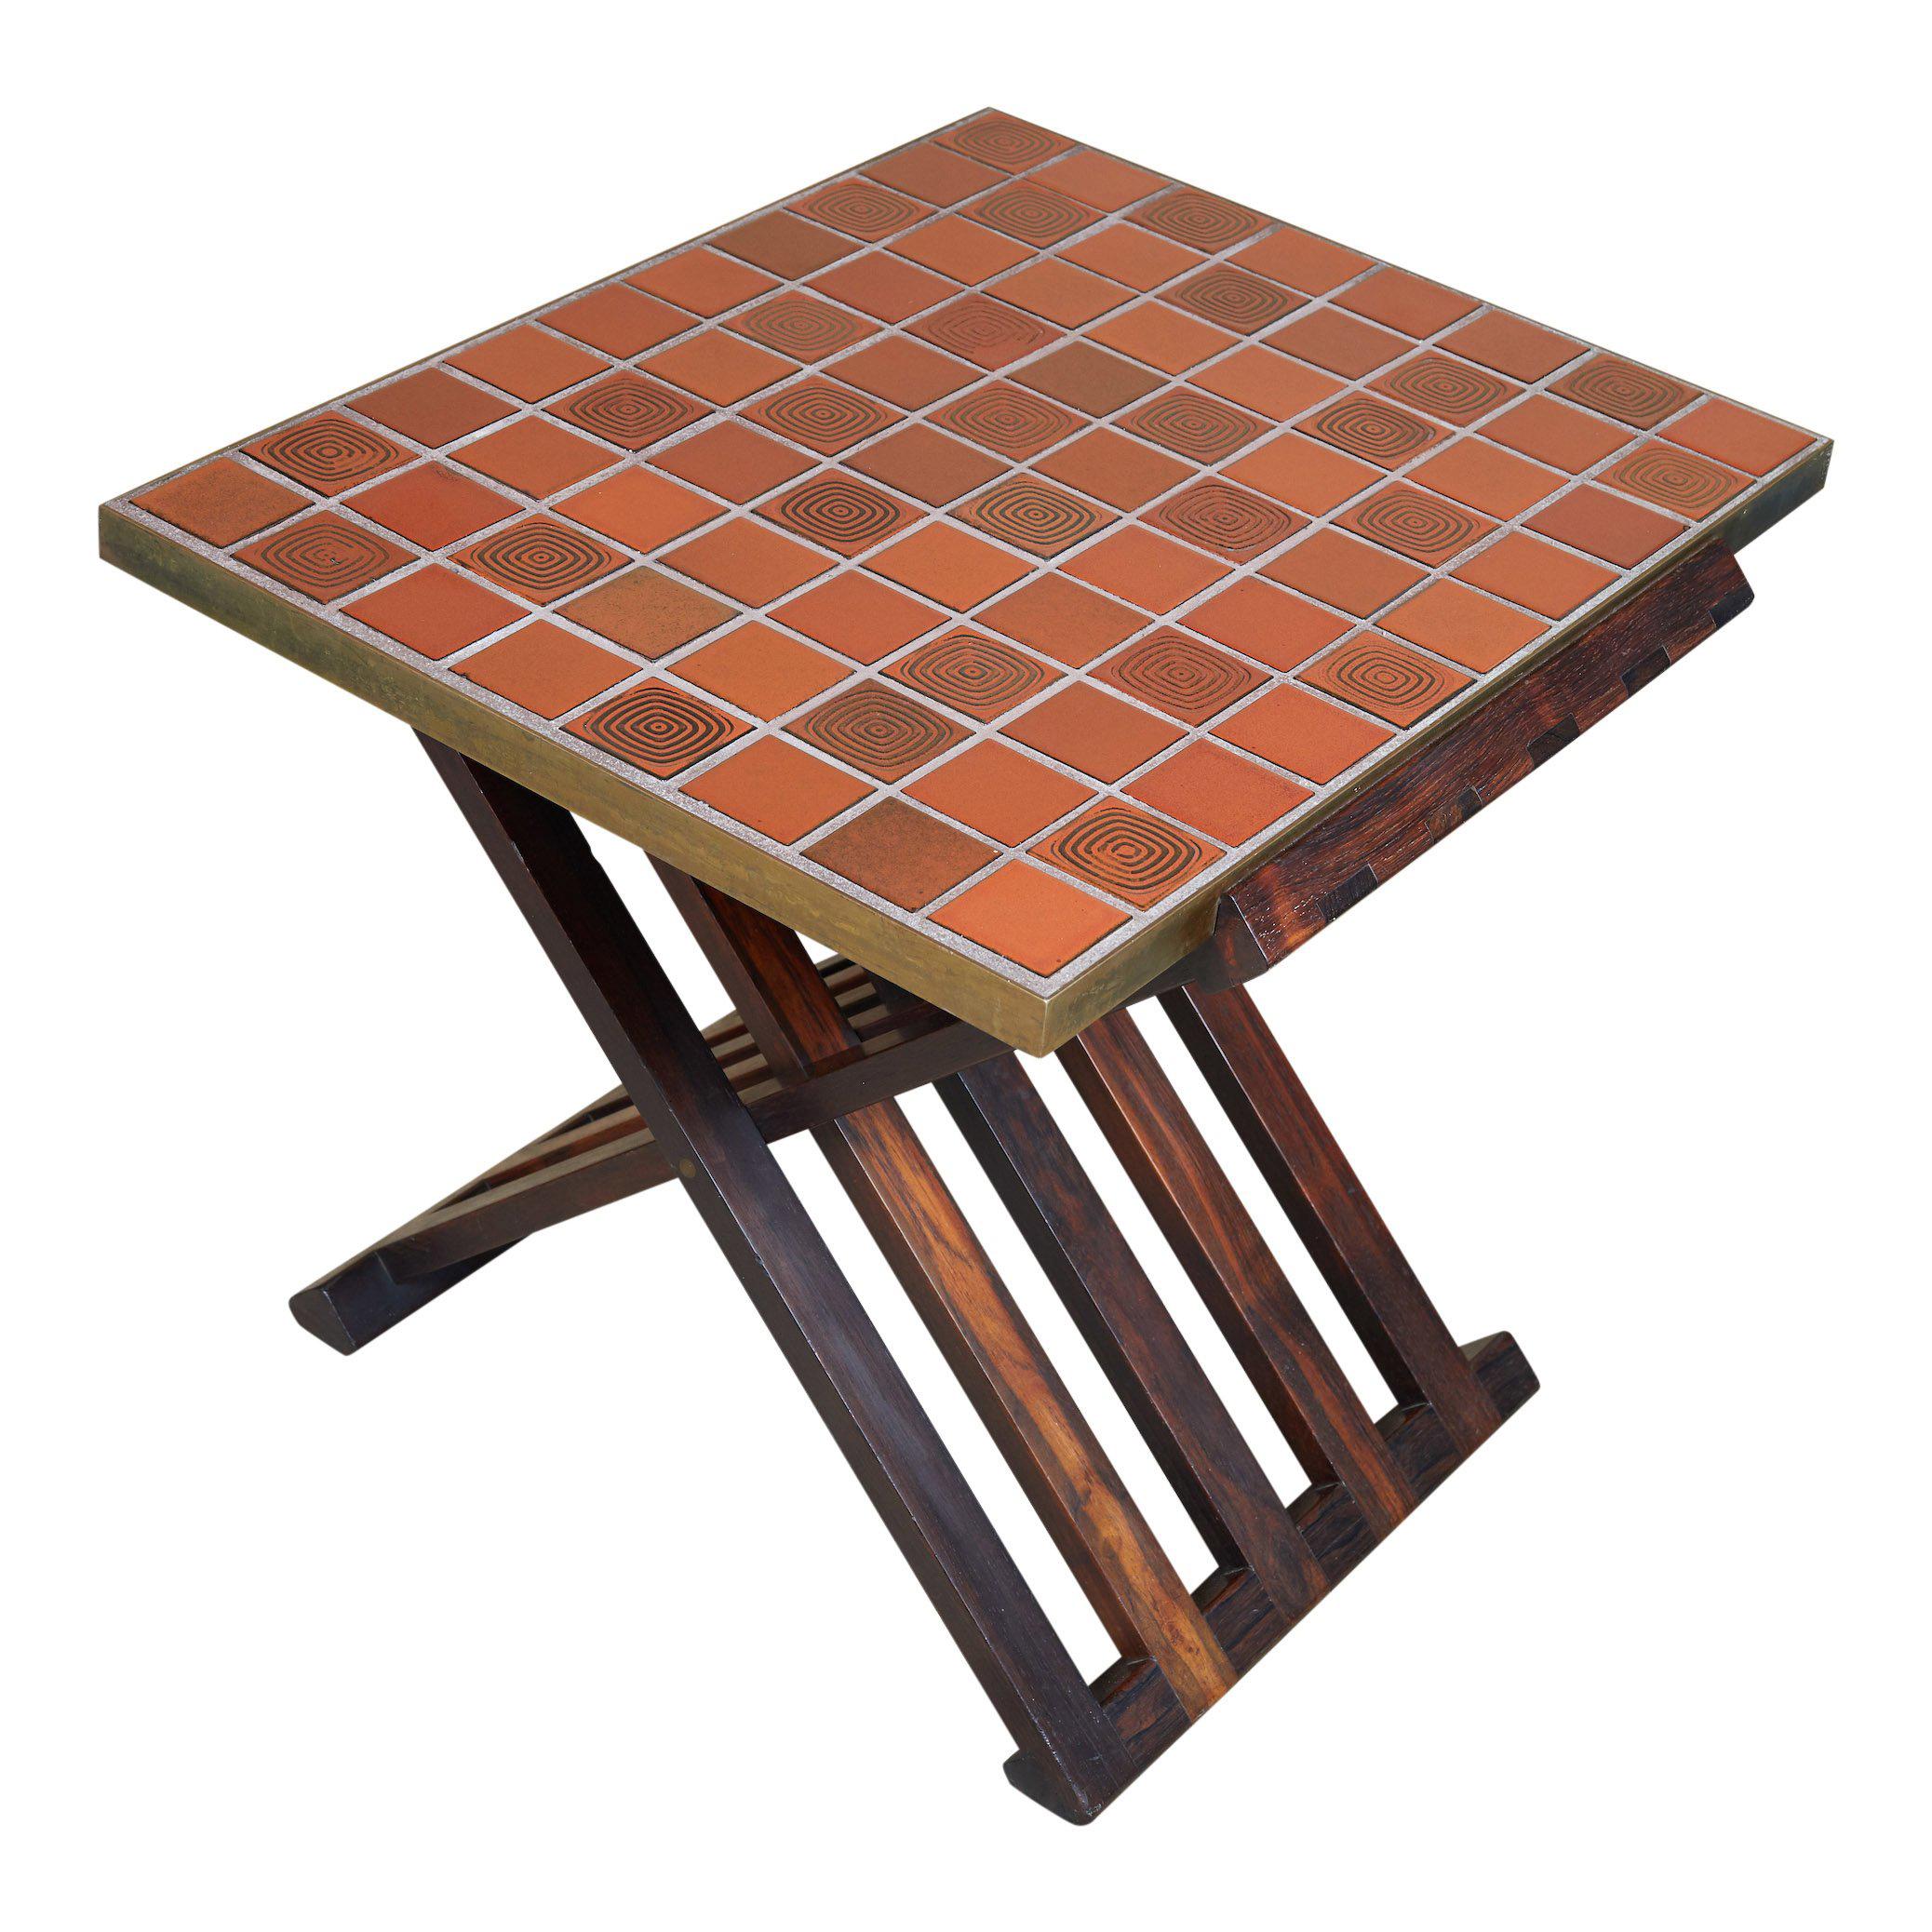 Rare Wood X-Form Folding Tile Top Table by Edward Wormley for Dunbar